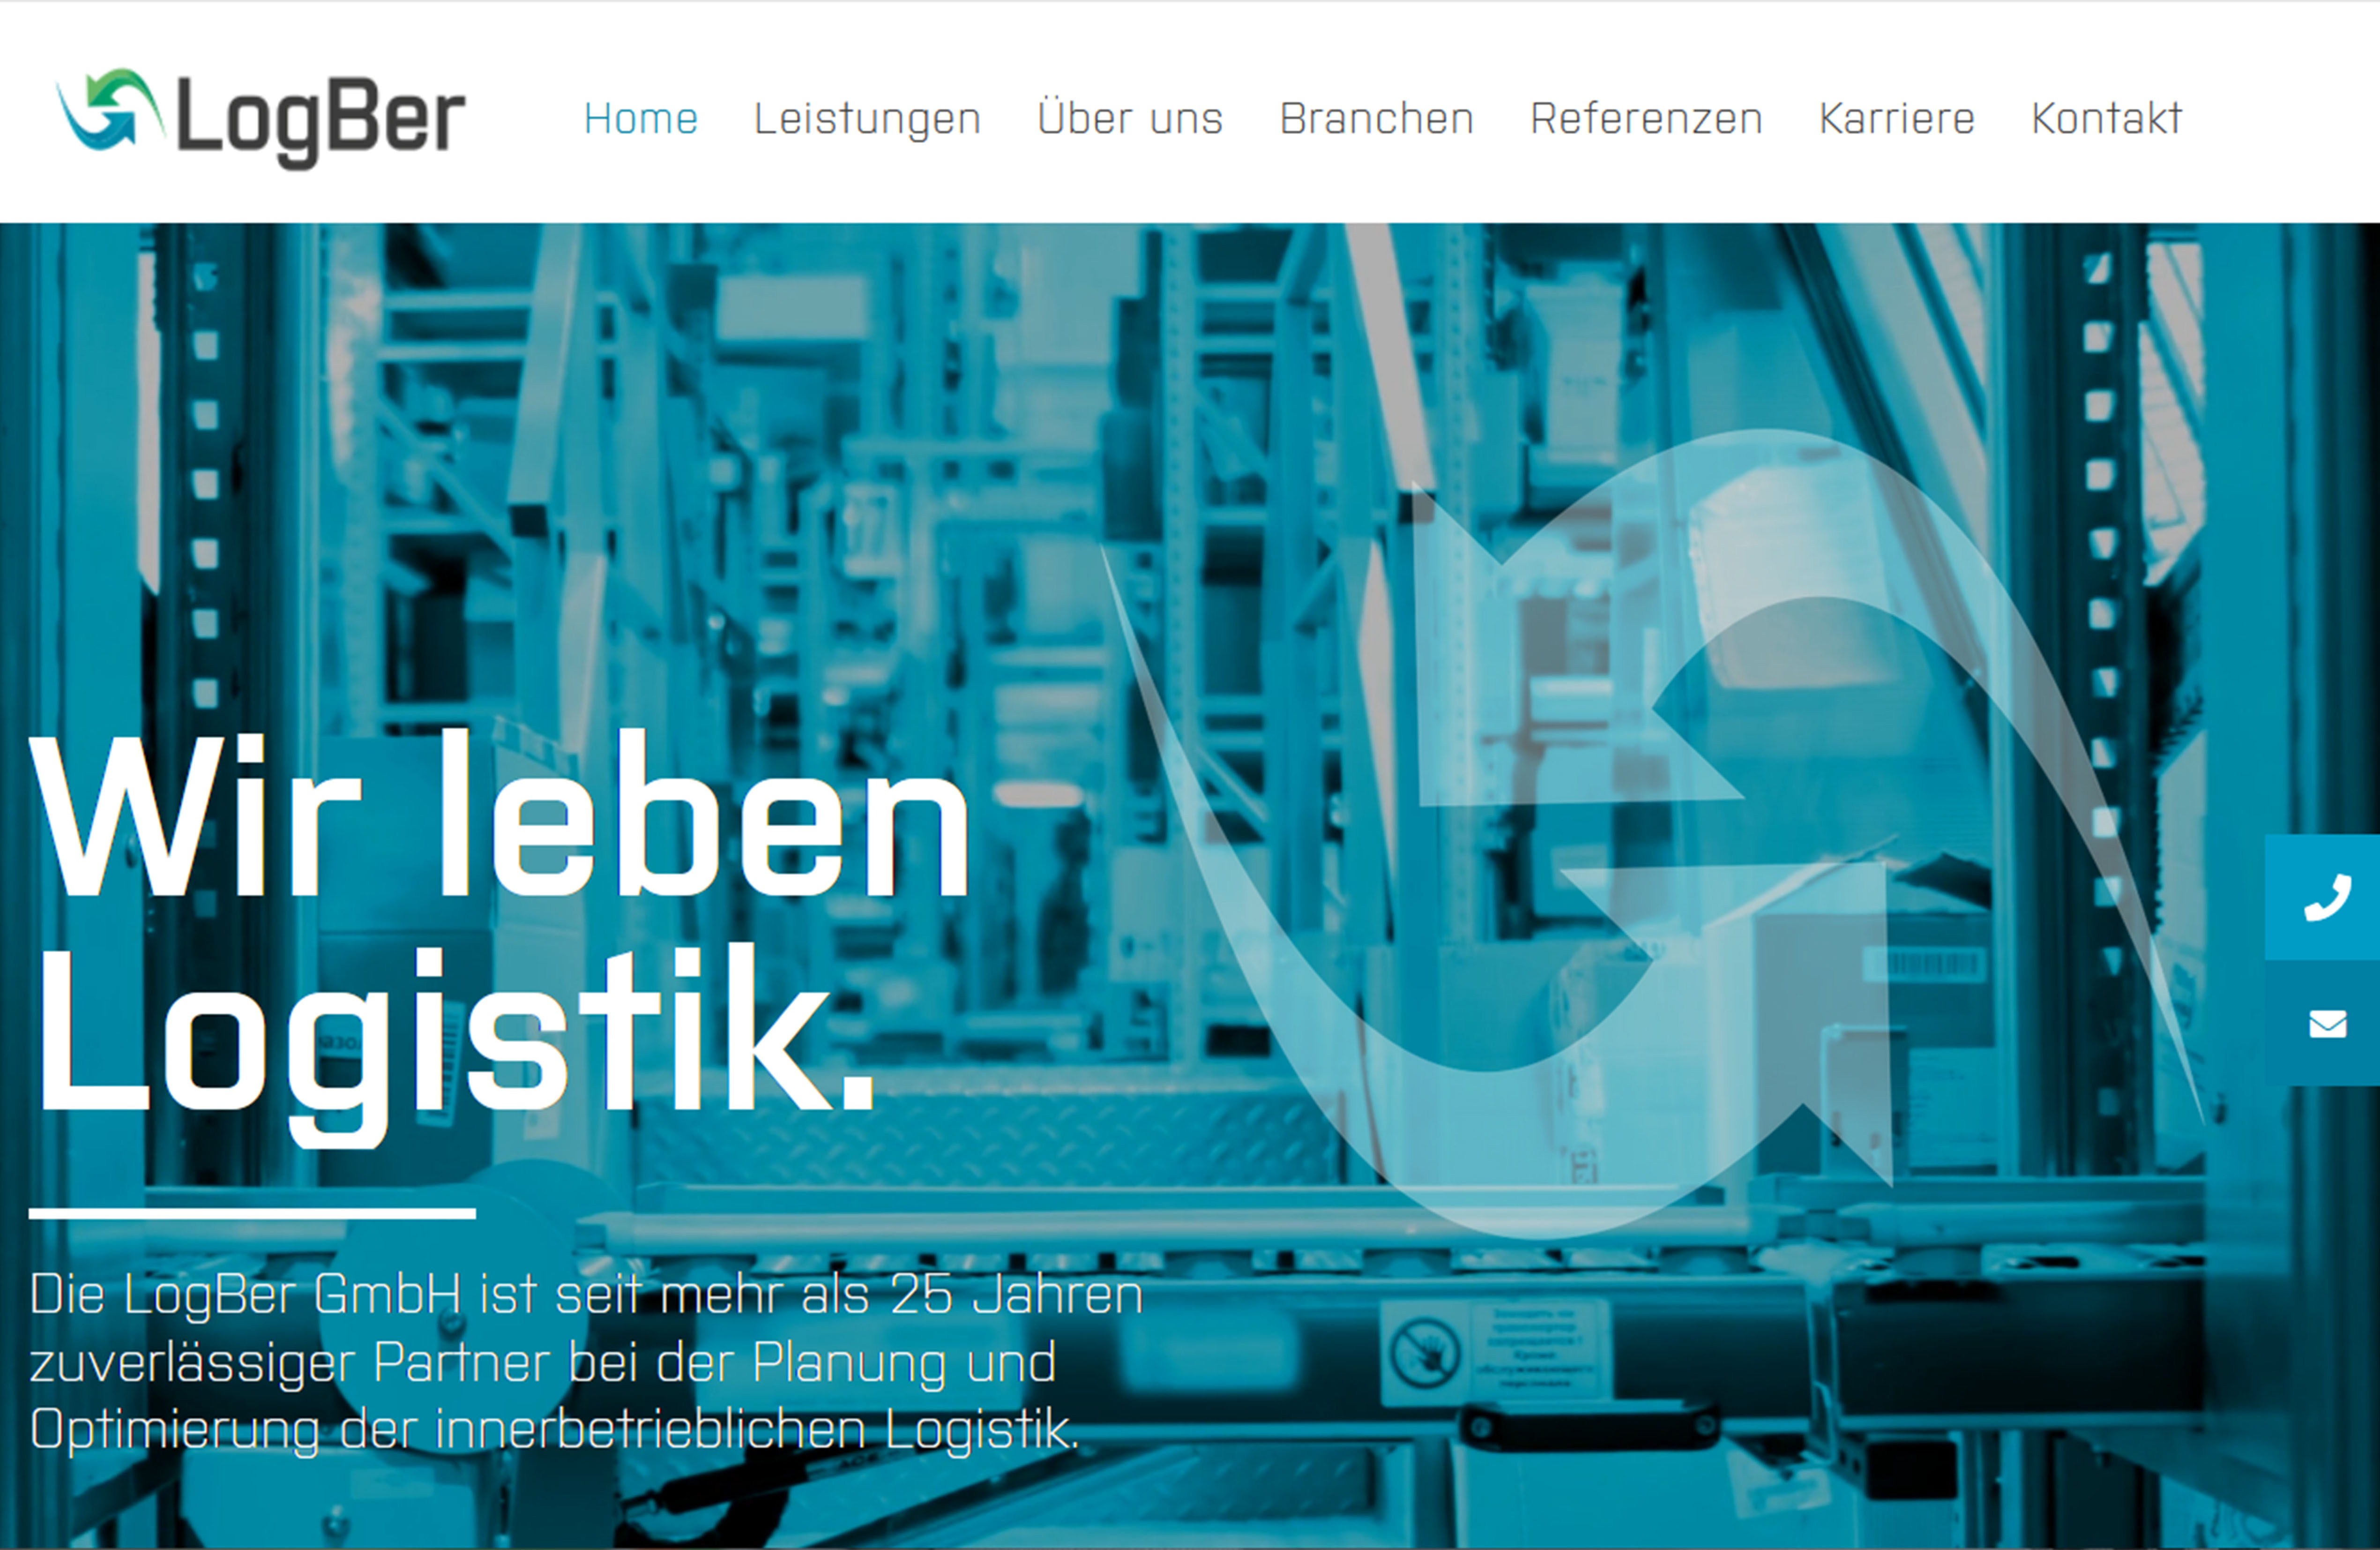 LogBer GmbH, Logistikunternehmen, Logistik, Homepage